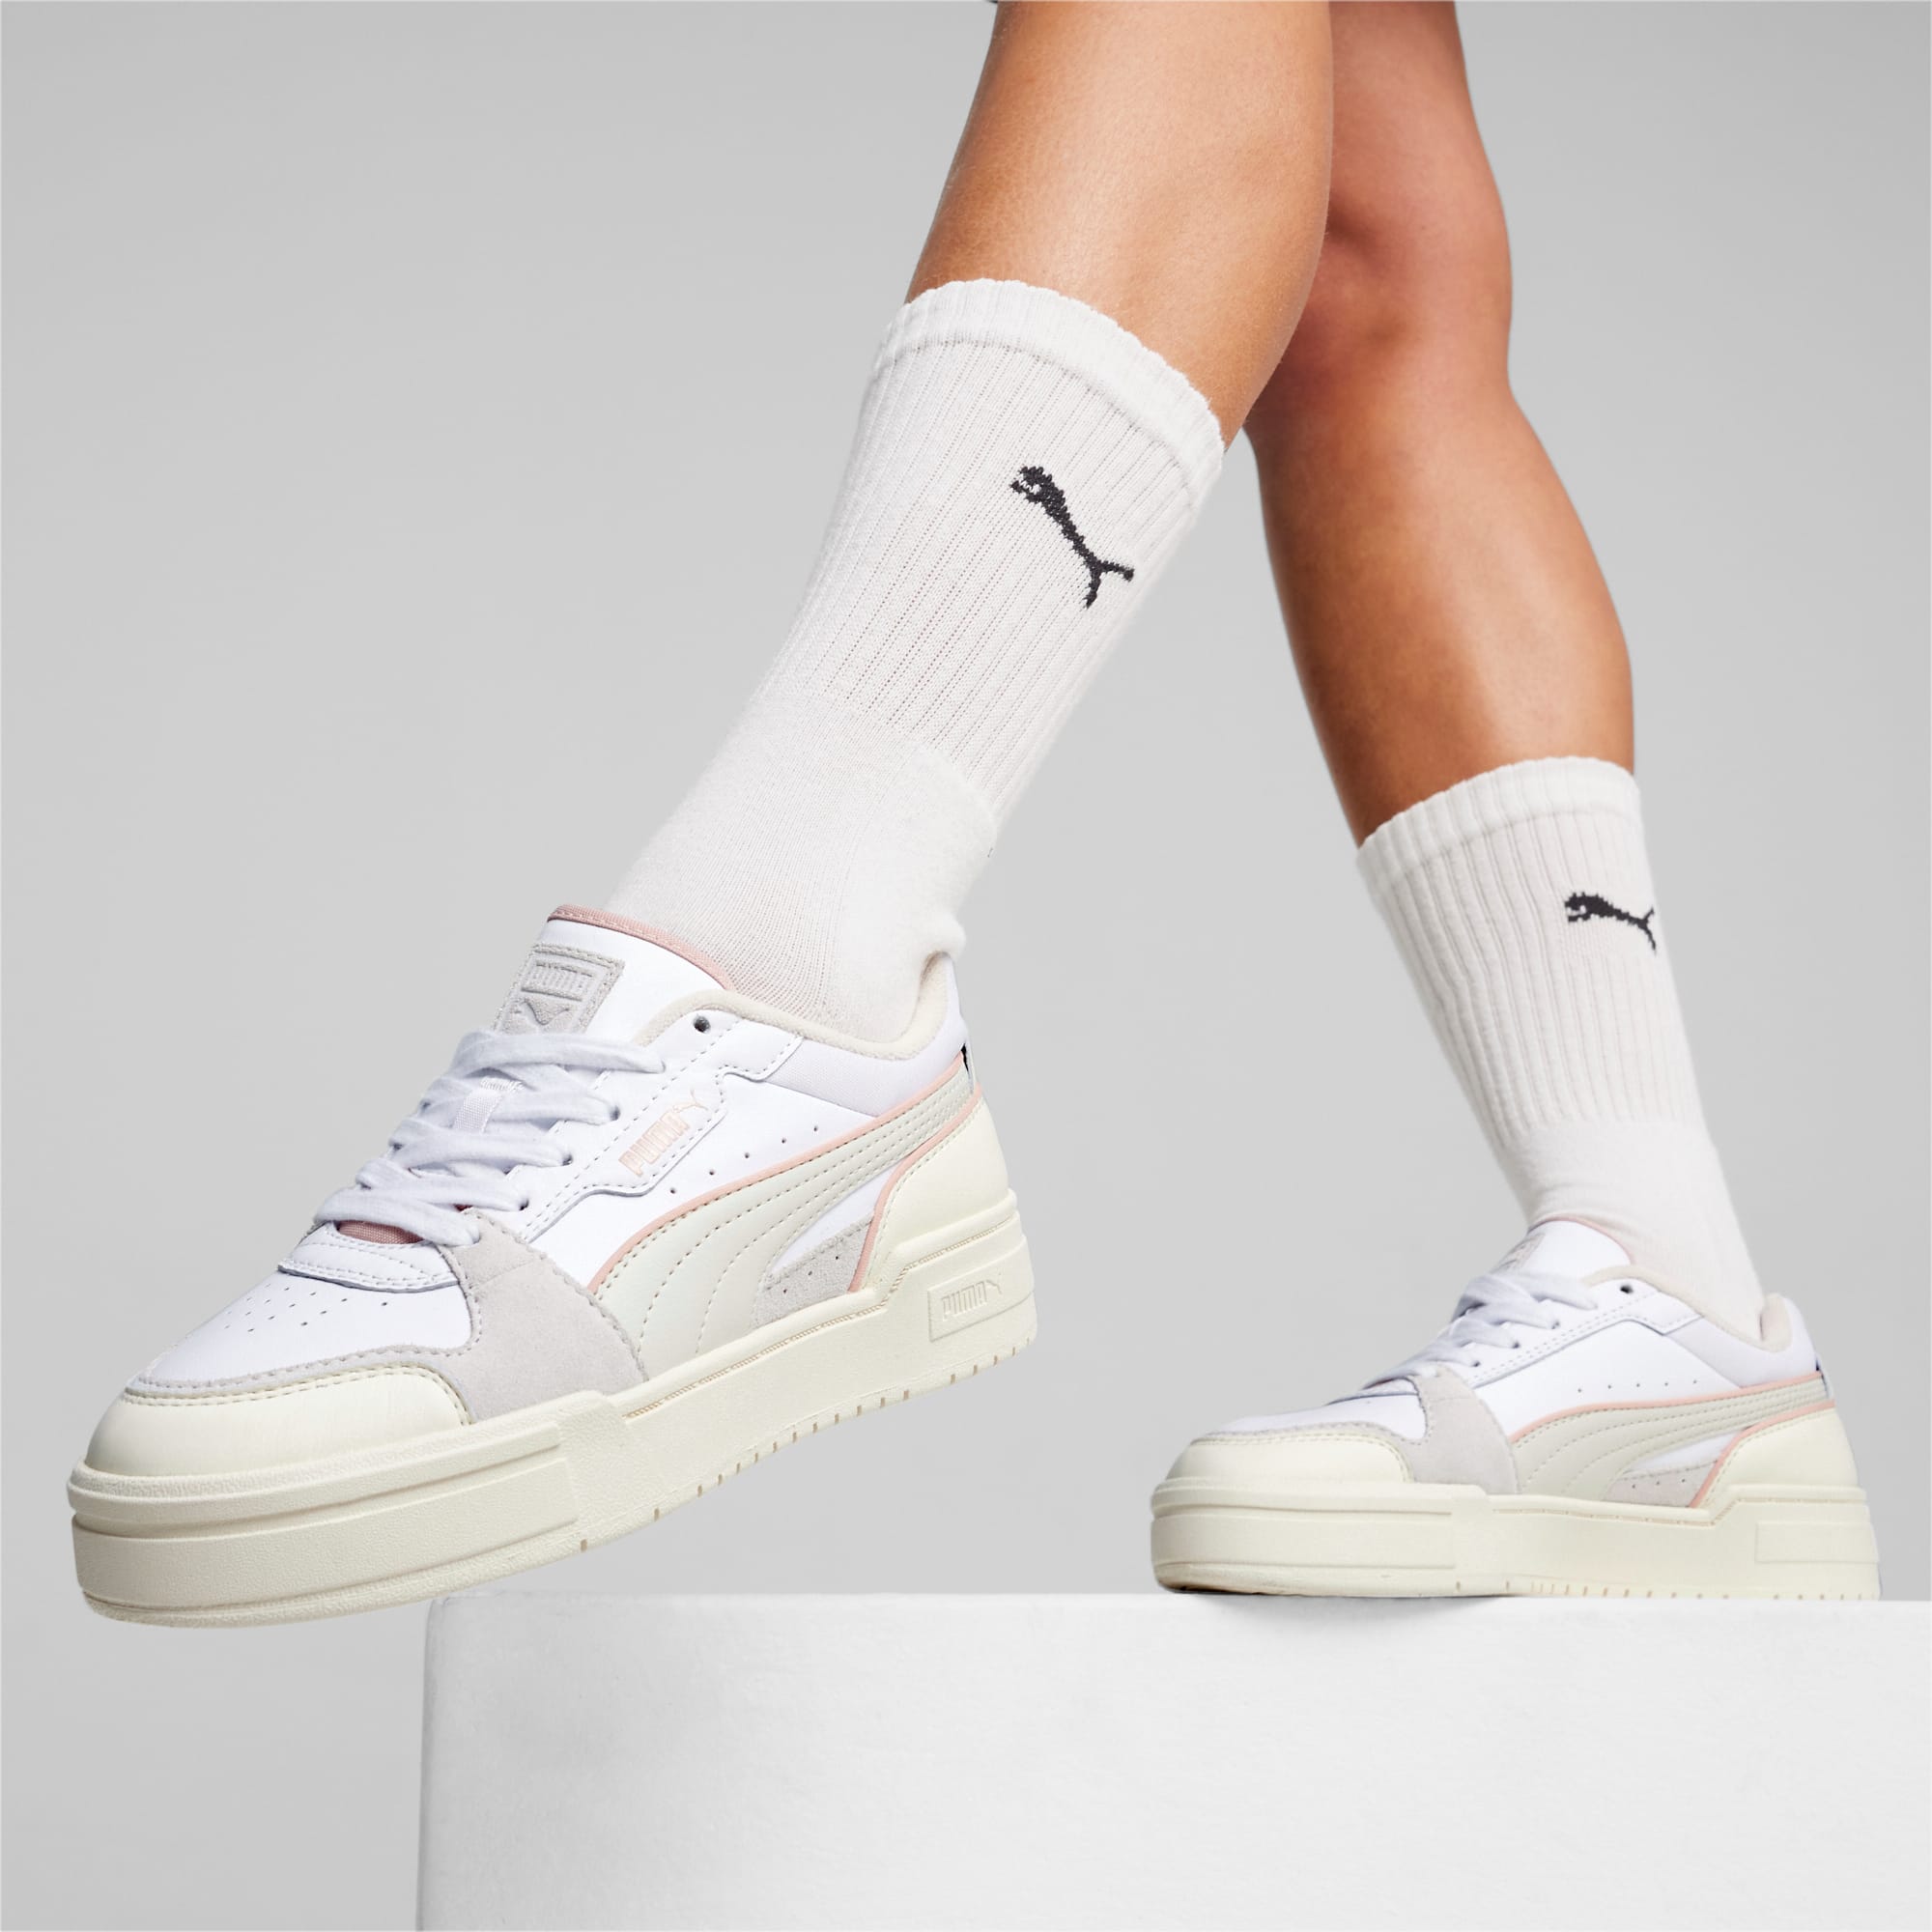 Women's PUMA Ca Pro Lux III Sneakers, White/Vapor Grey/Warm White